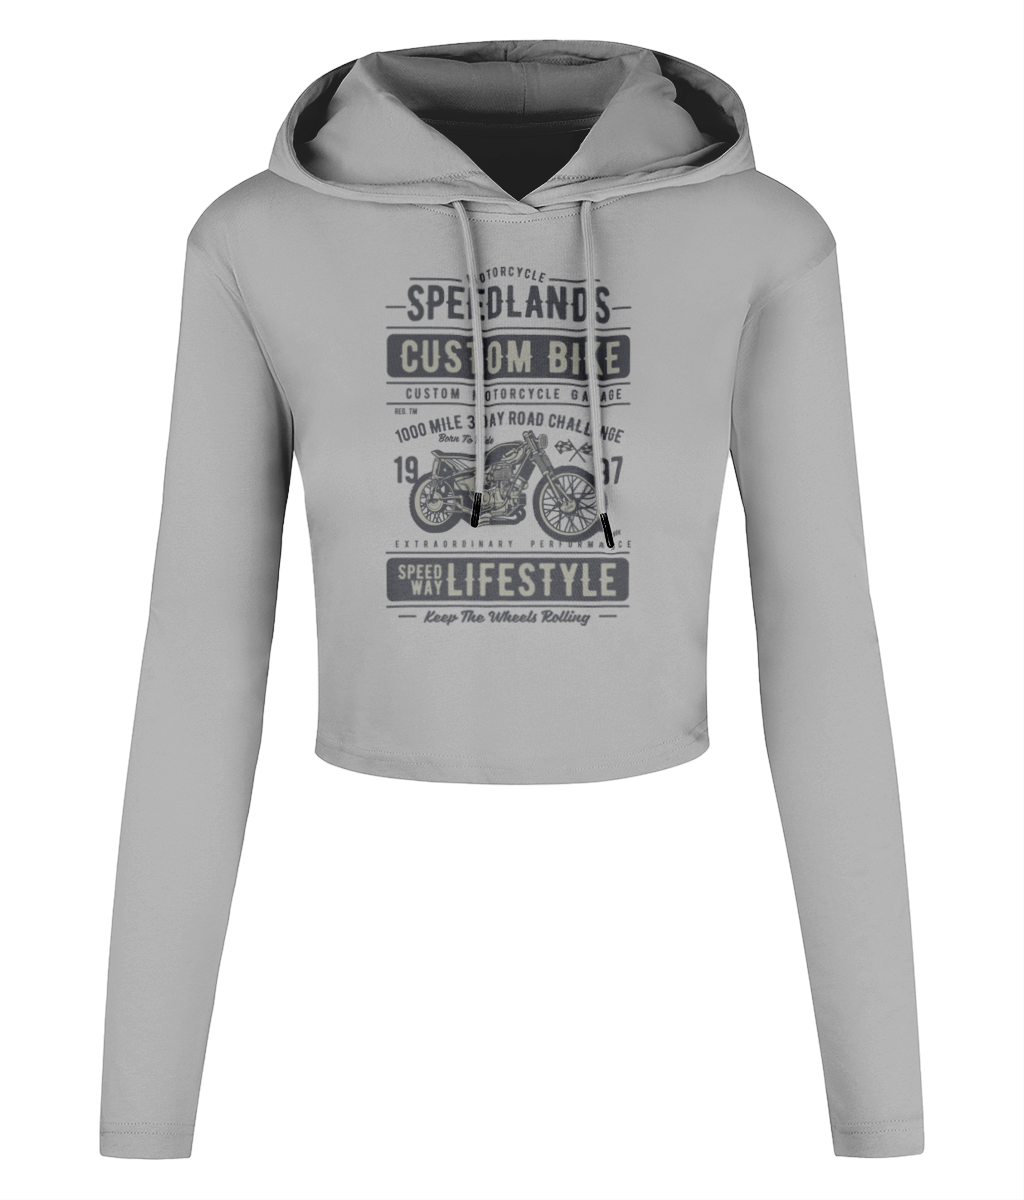 Speedlands Custom Bike – Women’s Cropped Hooded T-shirt